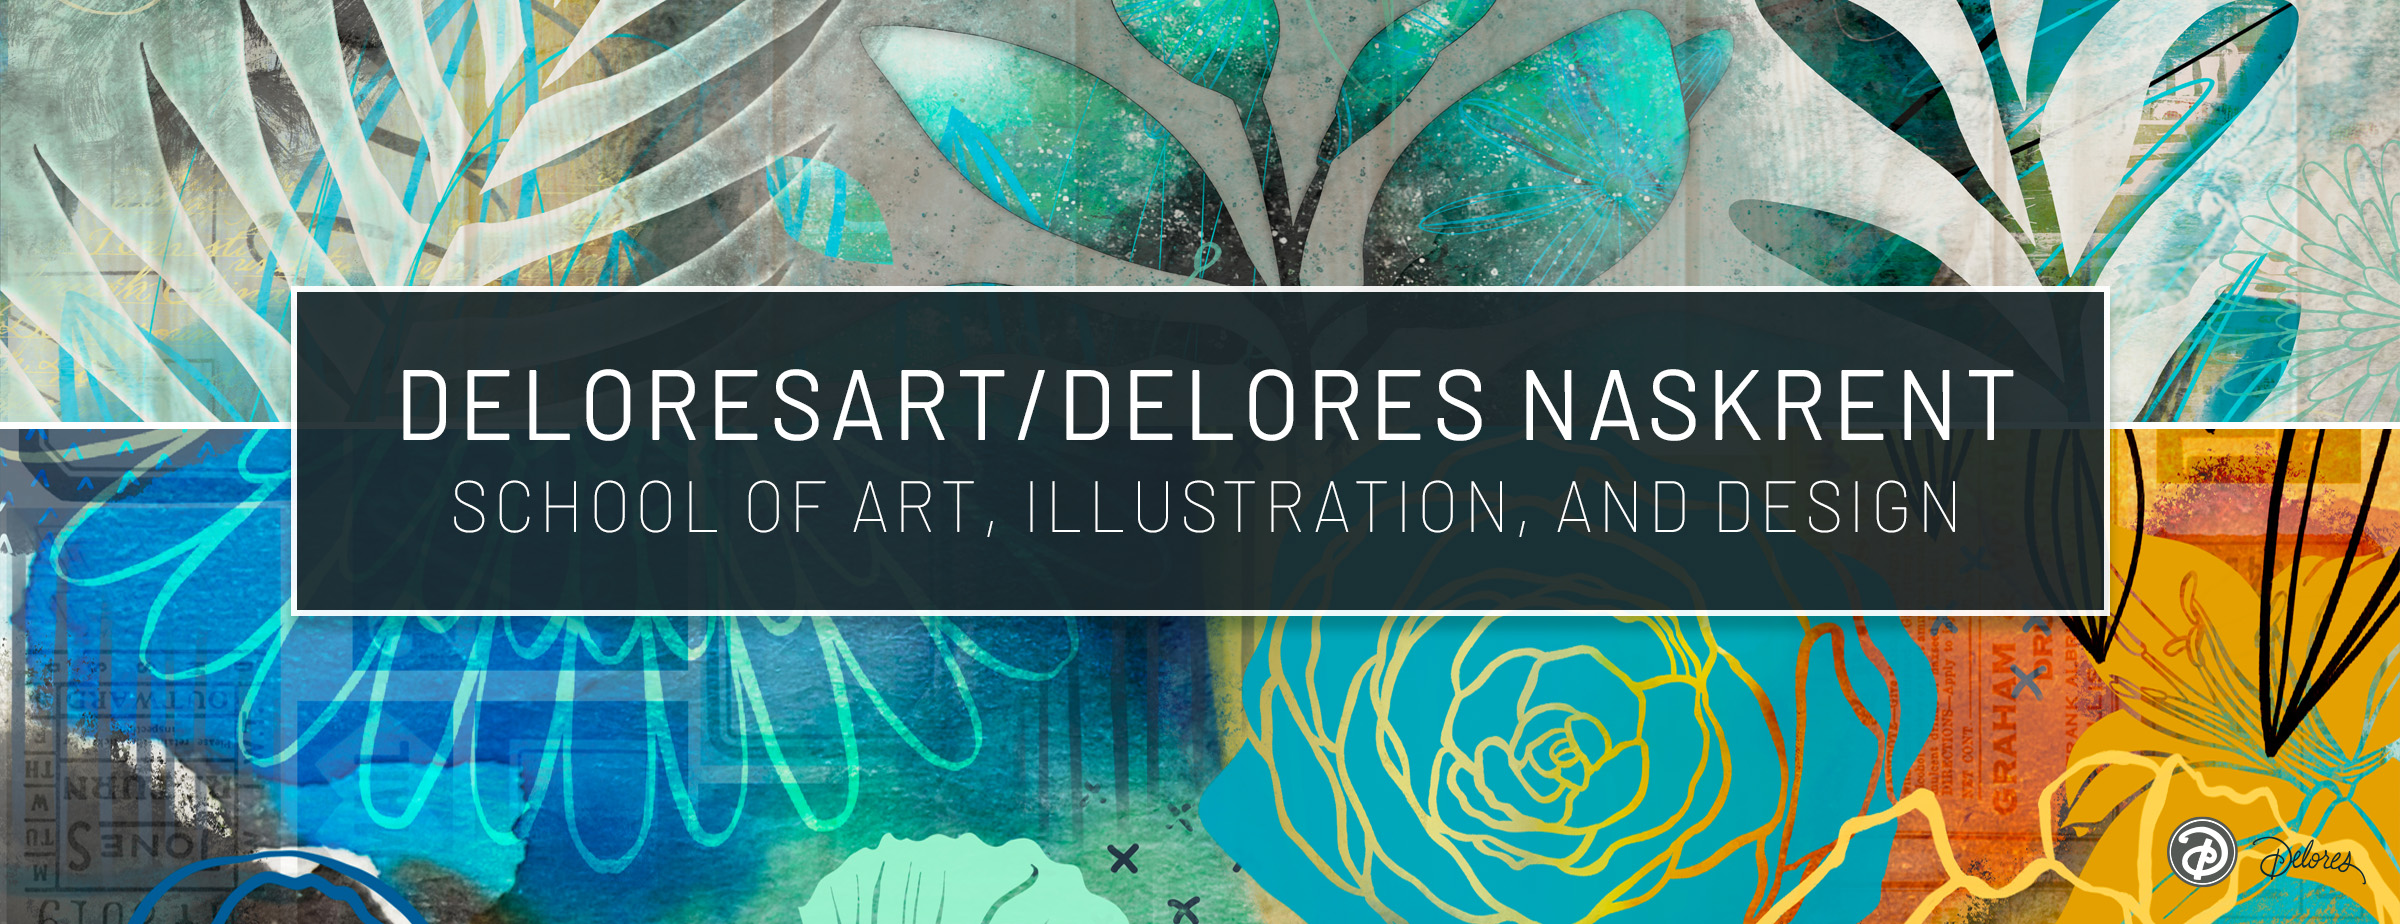 Deloresart School of Art and Design